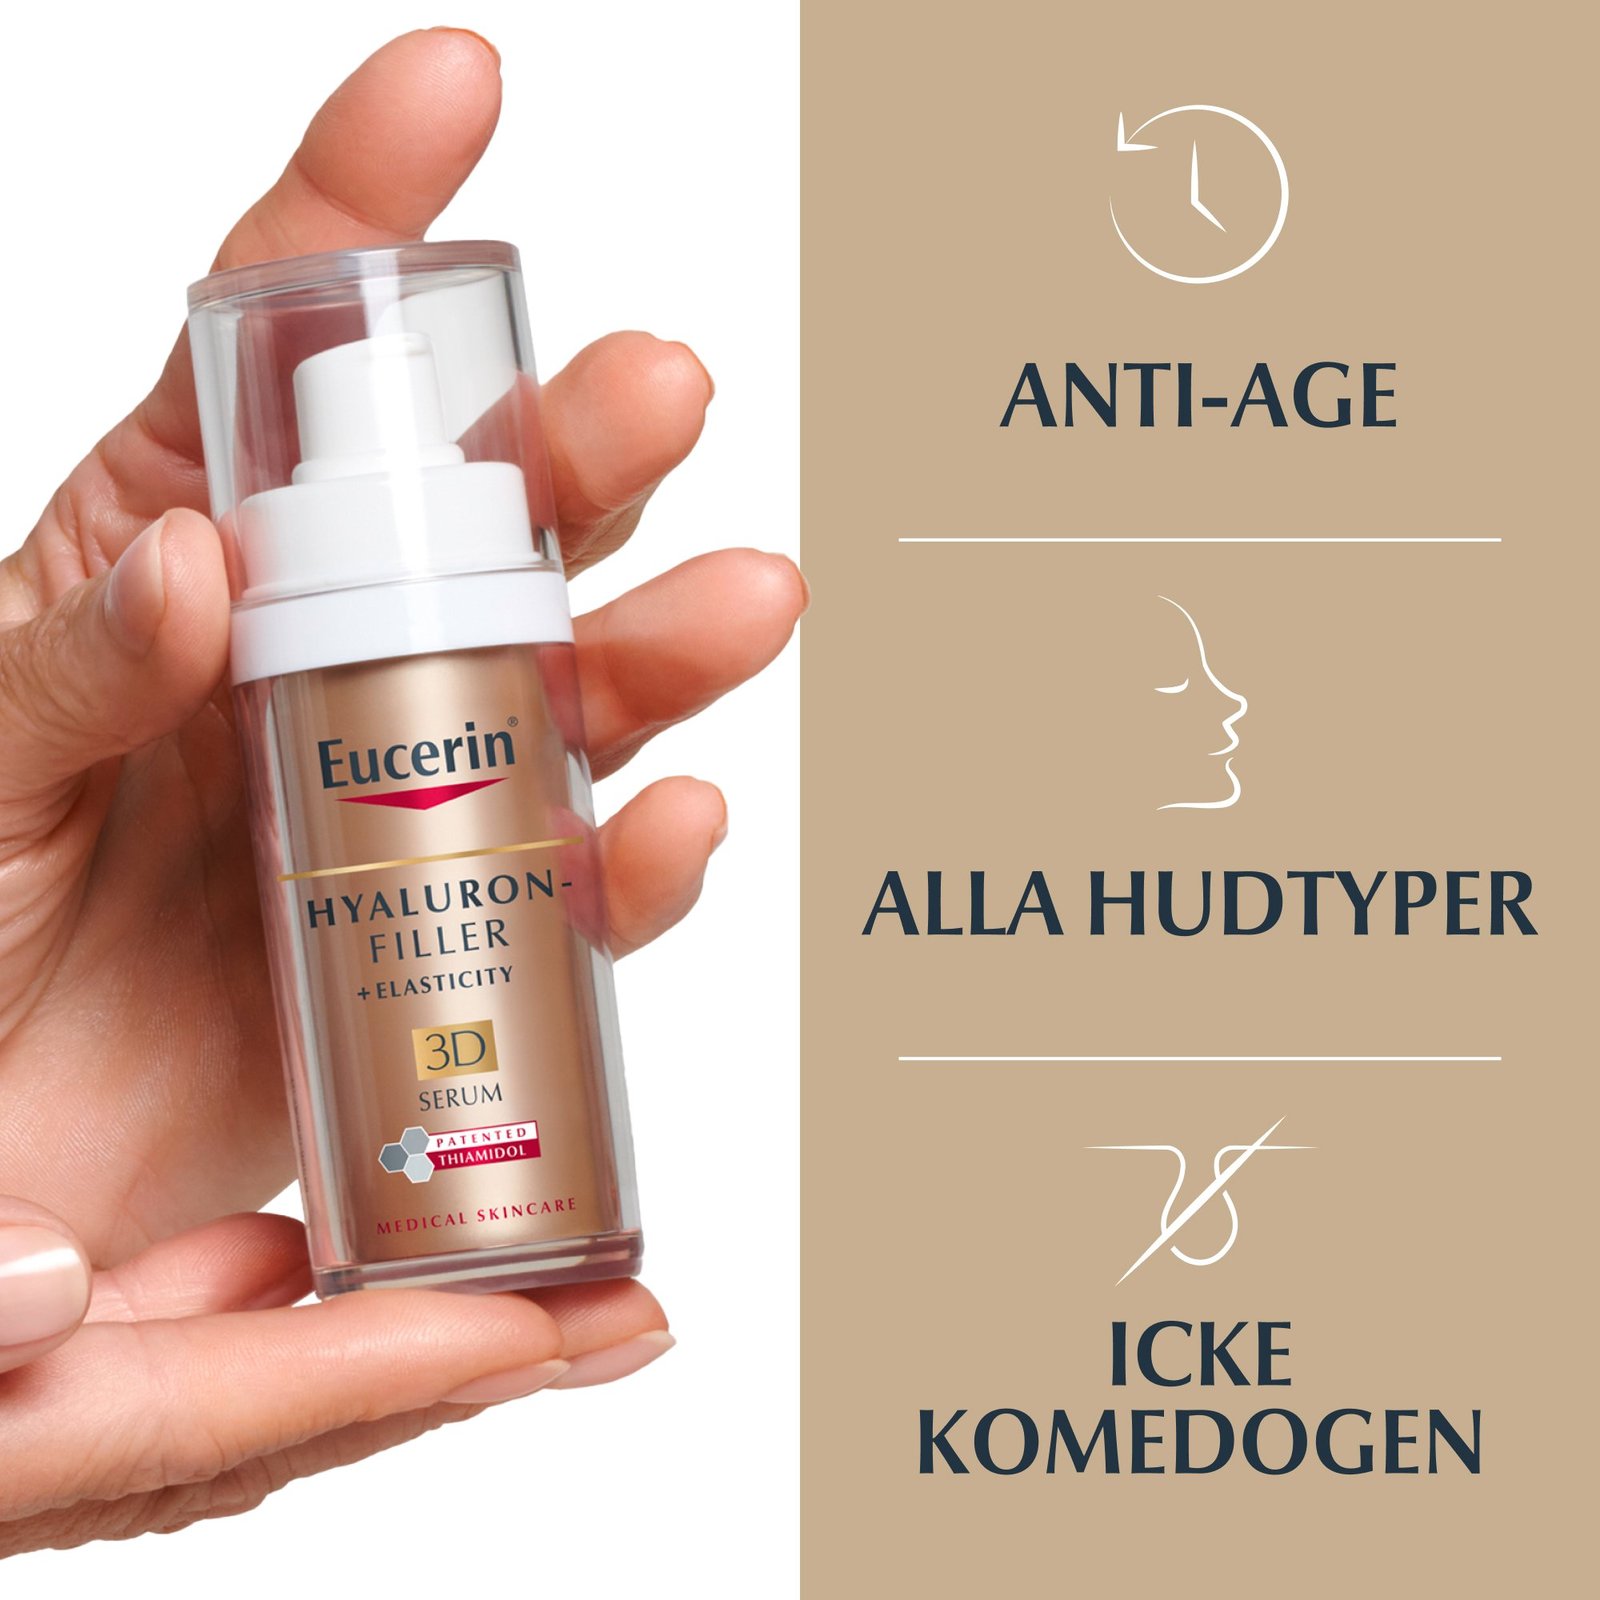 Eucerin Hyaluron-Filler+ Elasticity 3D Serum 30 ml